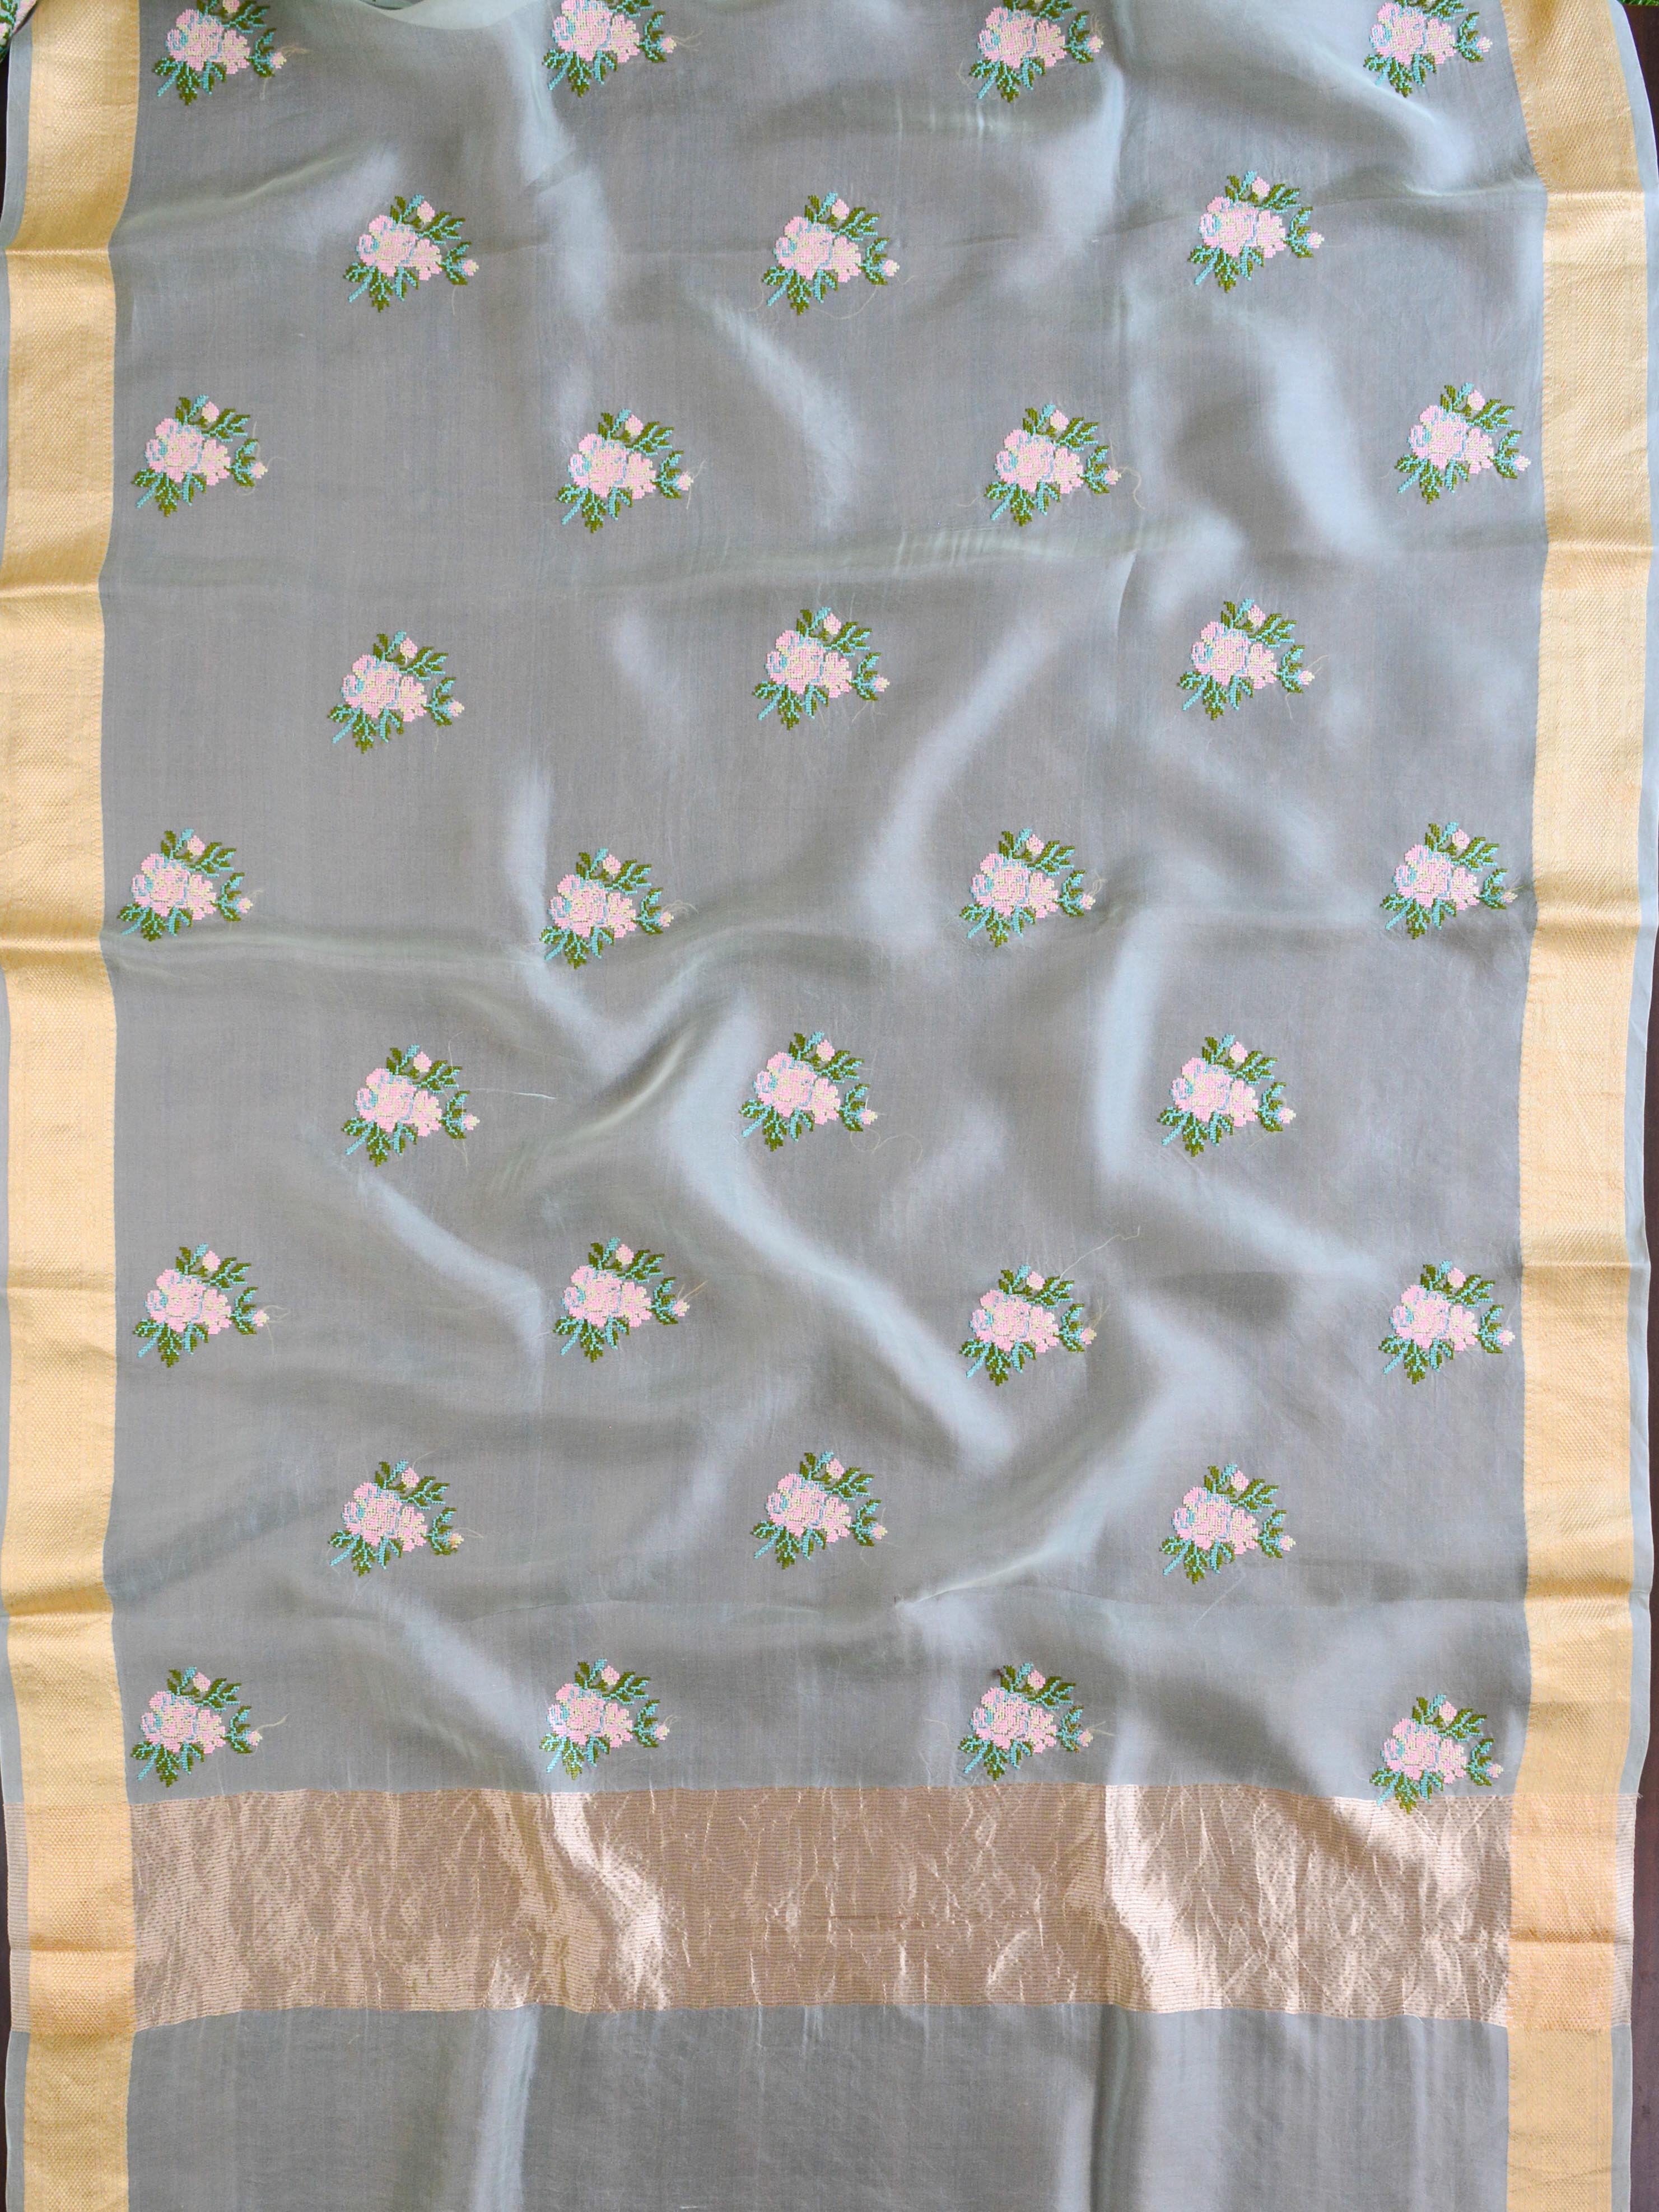 Banarasee Pure Organza Silk Saree With Embroidery-Green